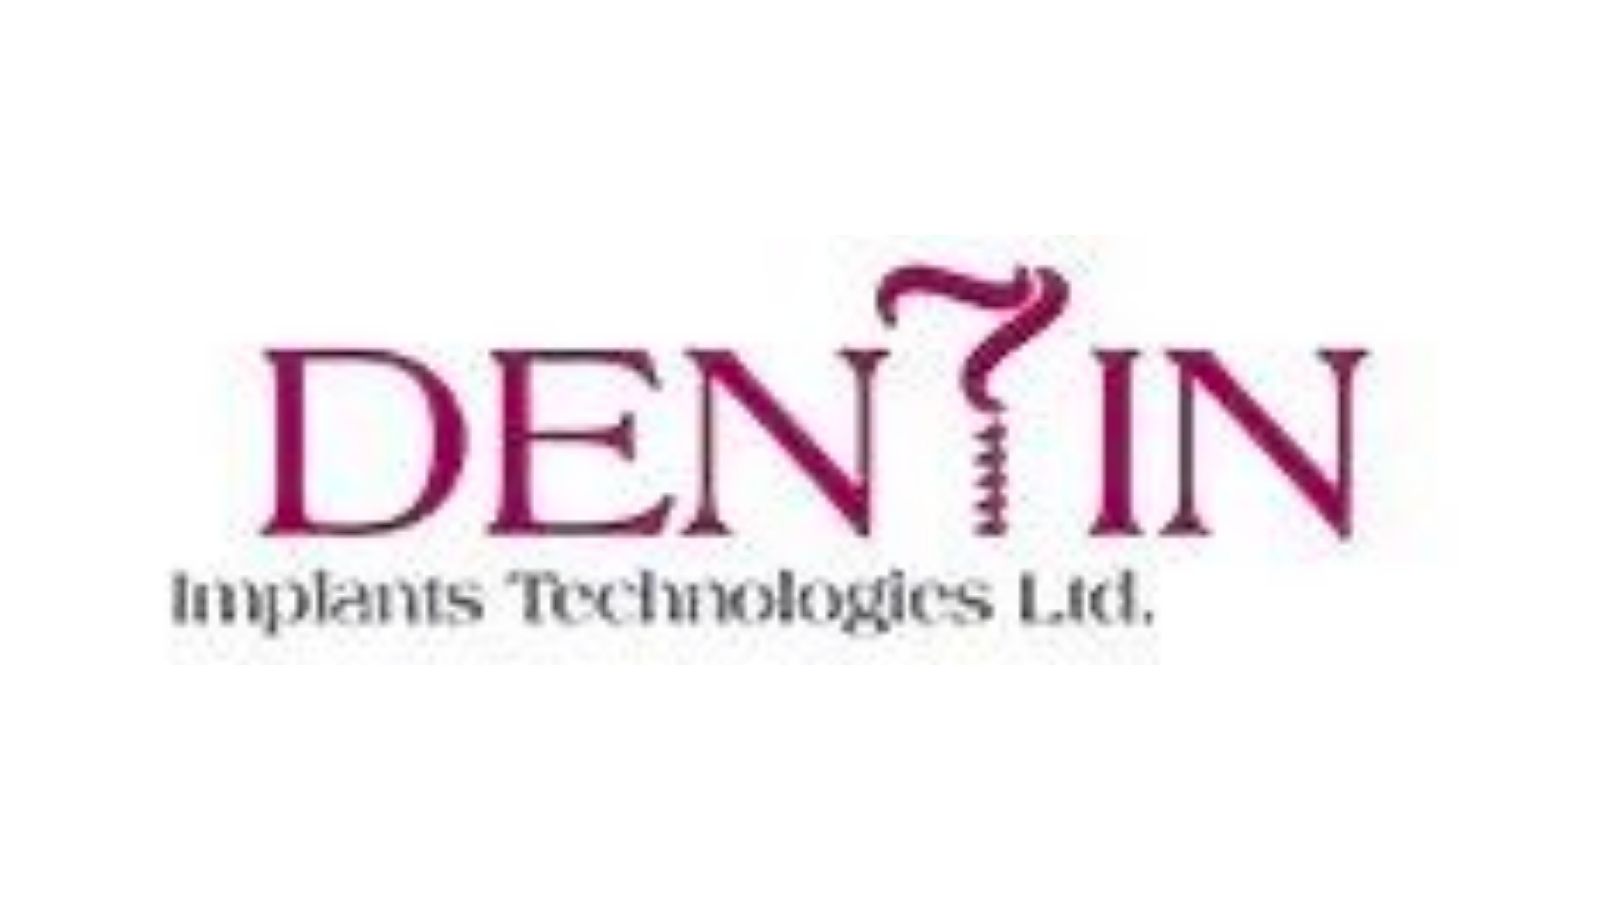 DENTIN Implants ，成熟的牙科植入物制造商和牙科植入物供应商